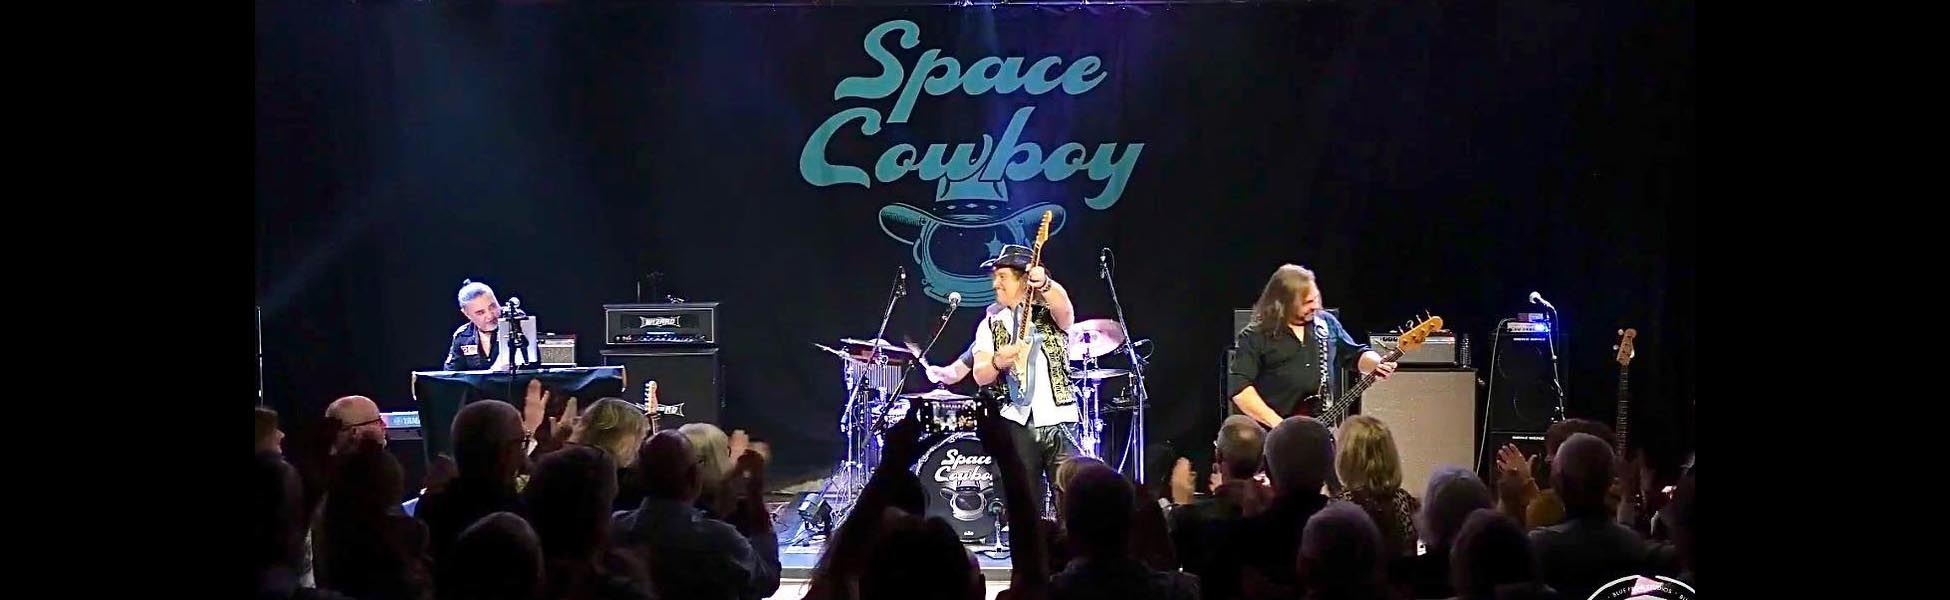 Space Cowboy - Steve Miller Tribute Band